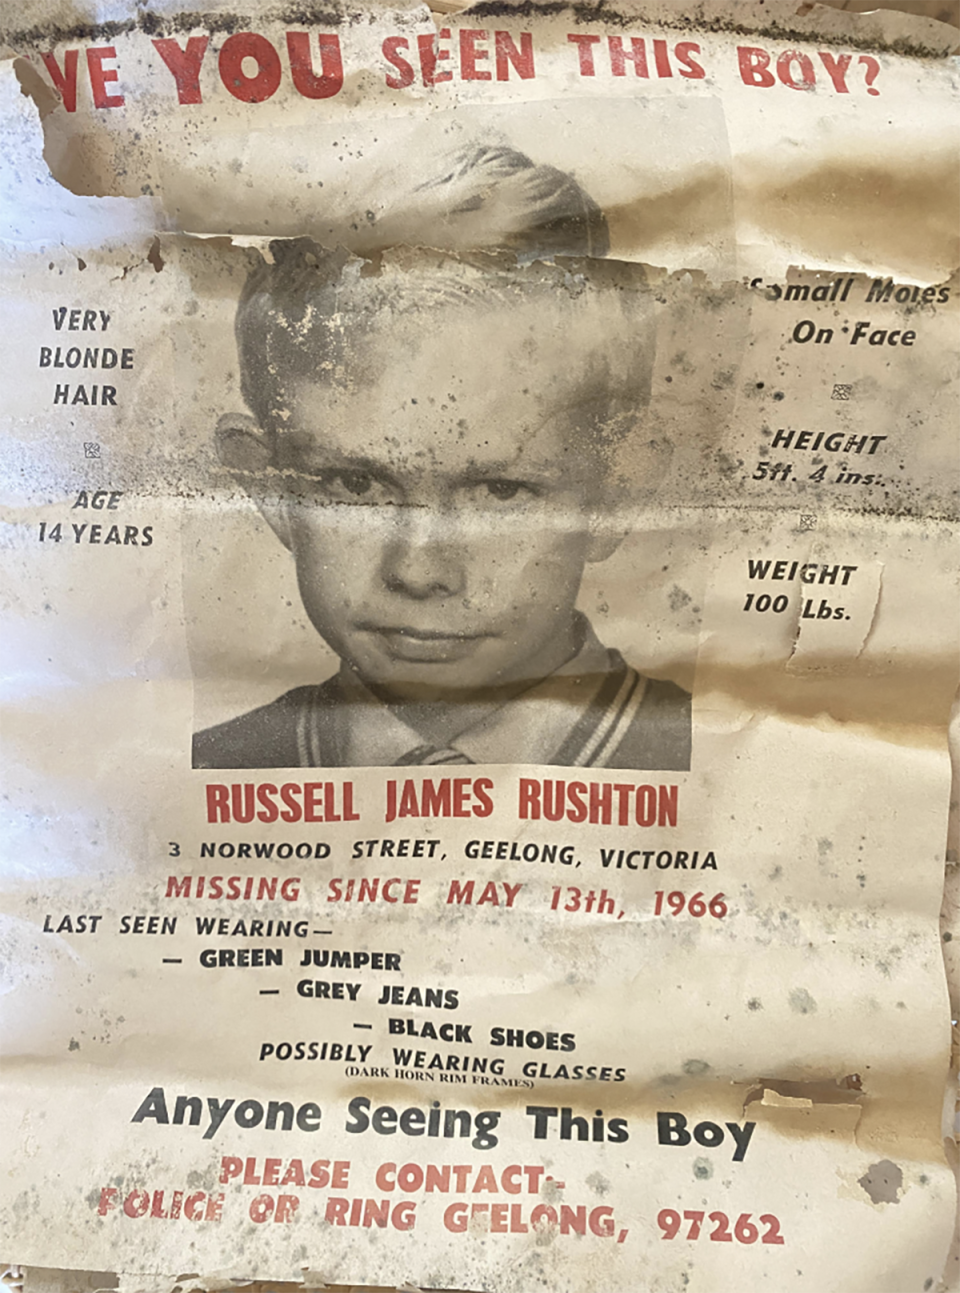 The missing poster for Russell James Rushton.